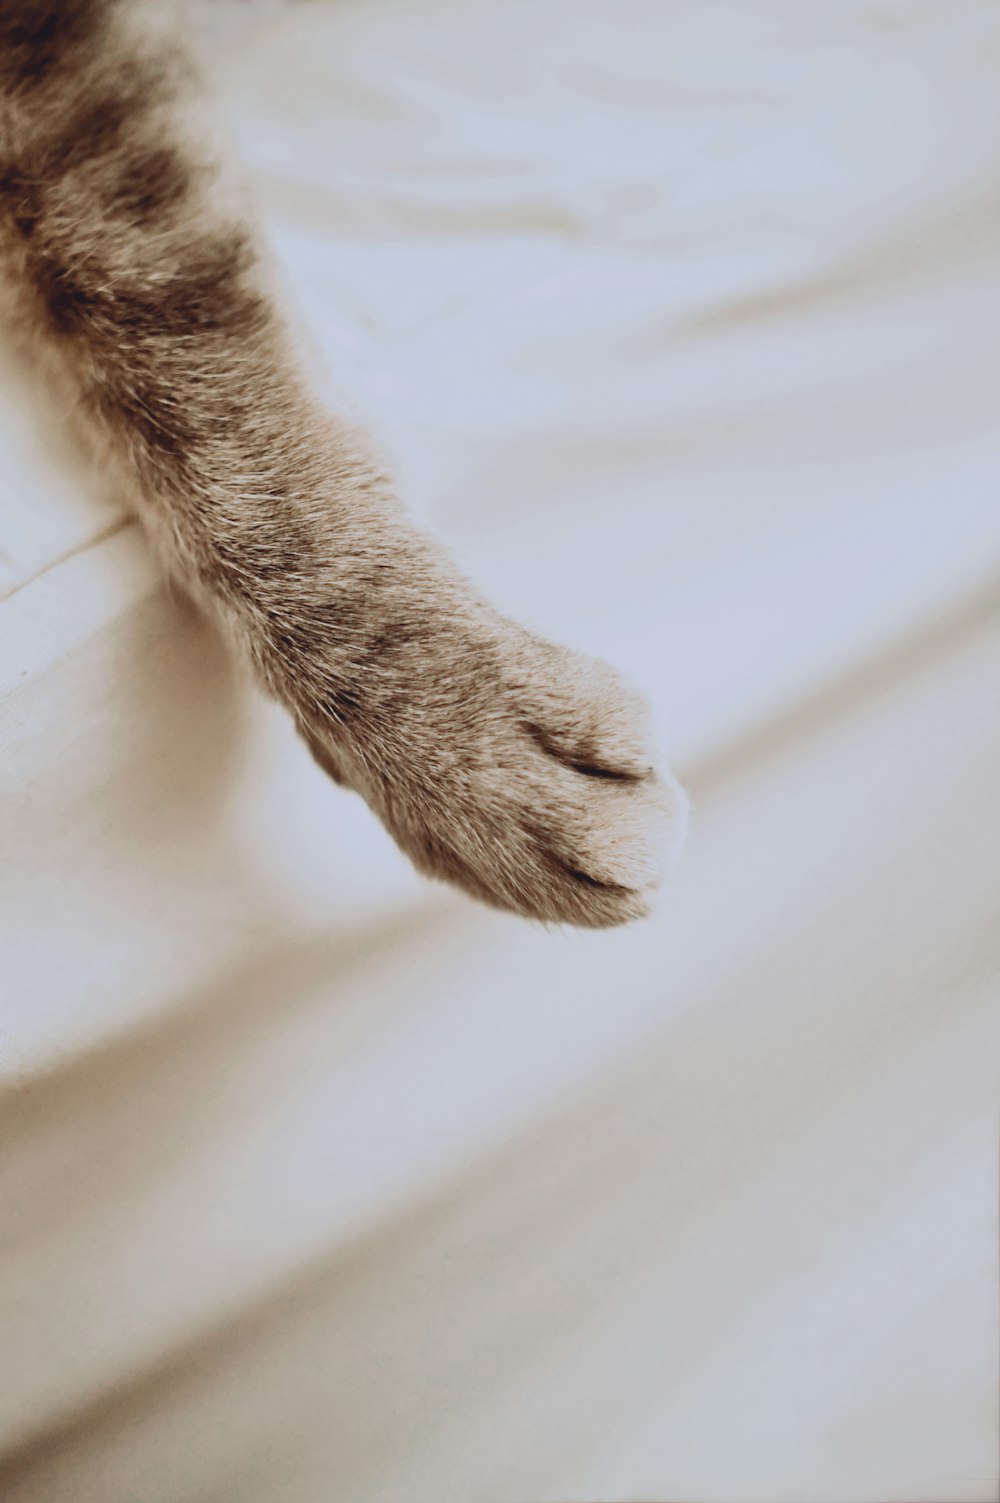 pata marrom do gato no têxtil branco